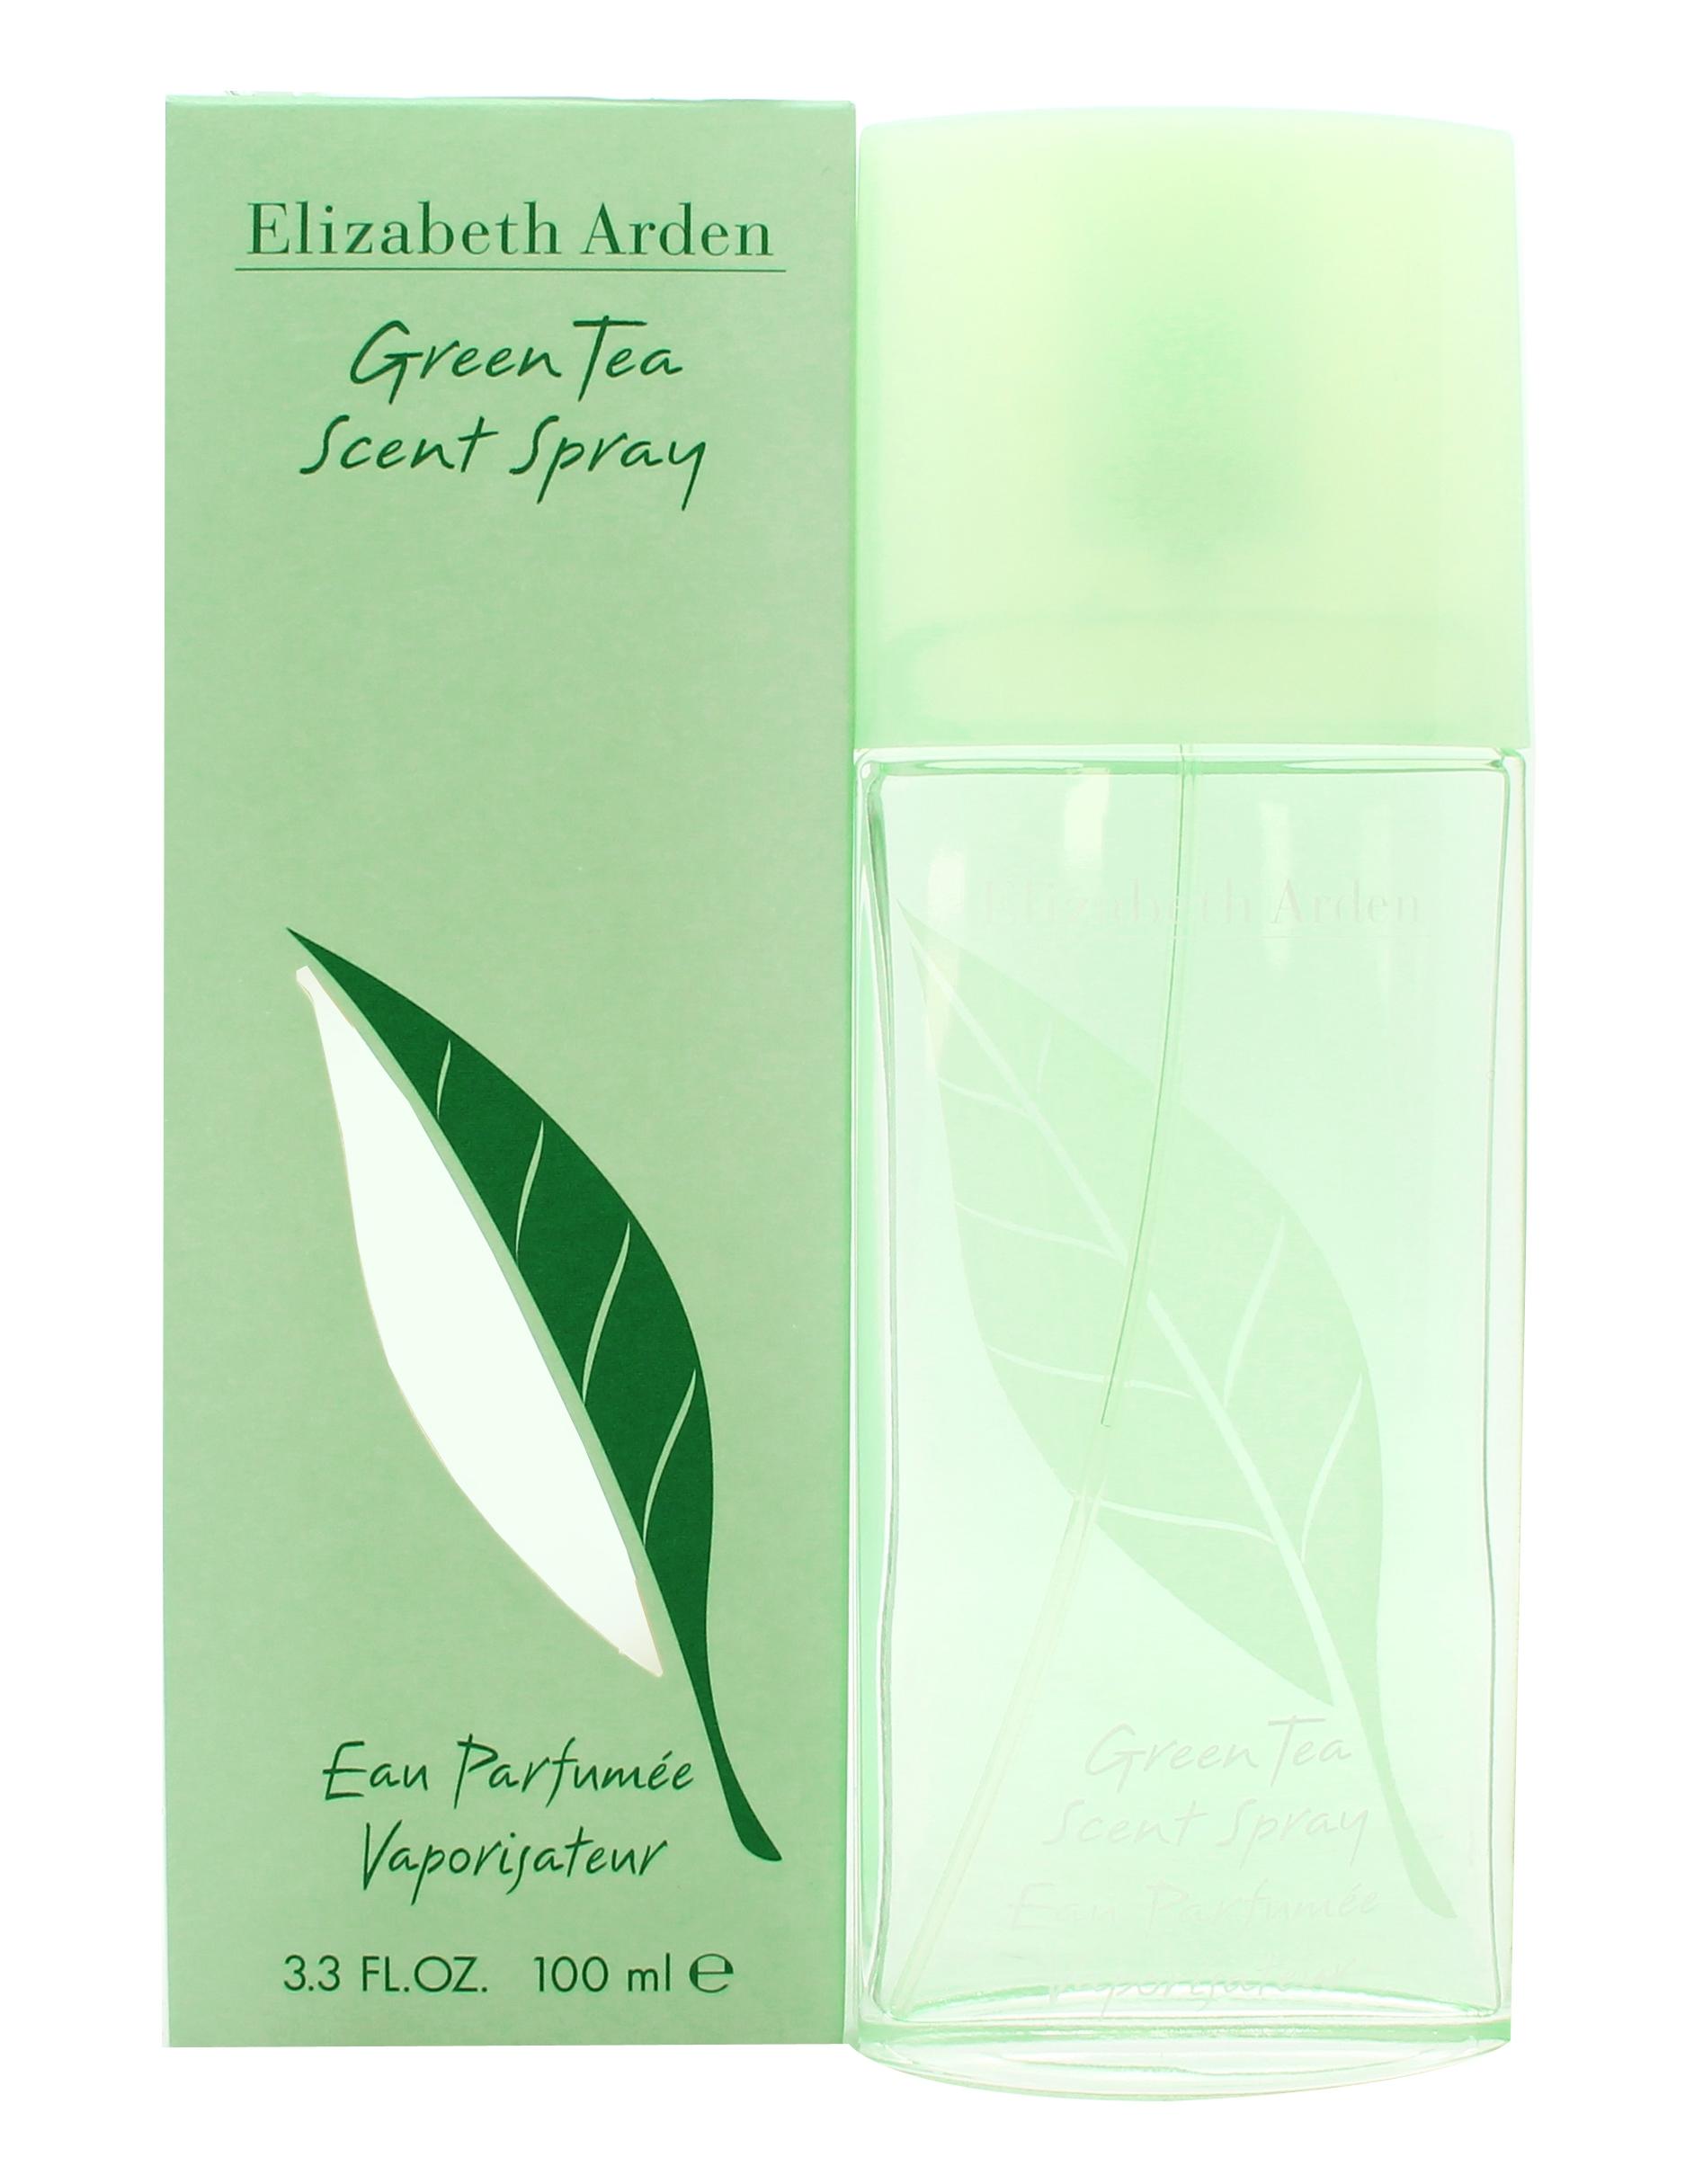 Elizabeth Arden Green Tea Eau de Parfum 100ml Spray